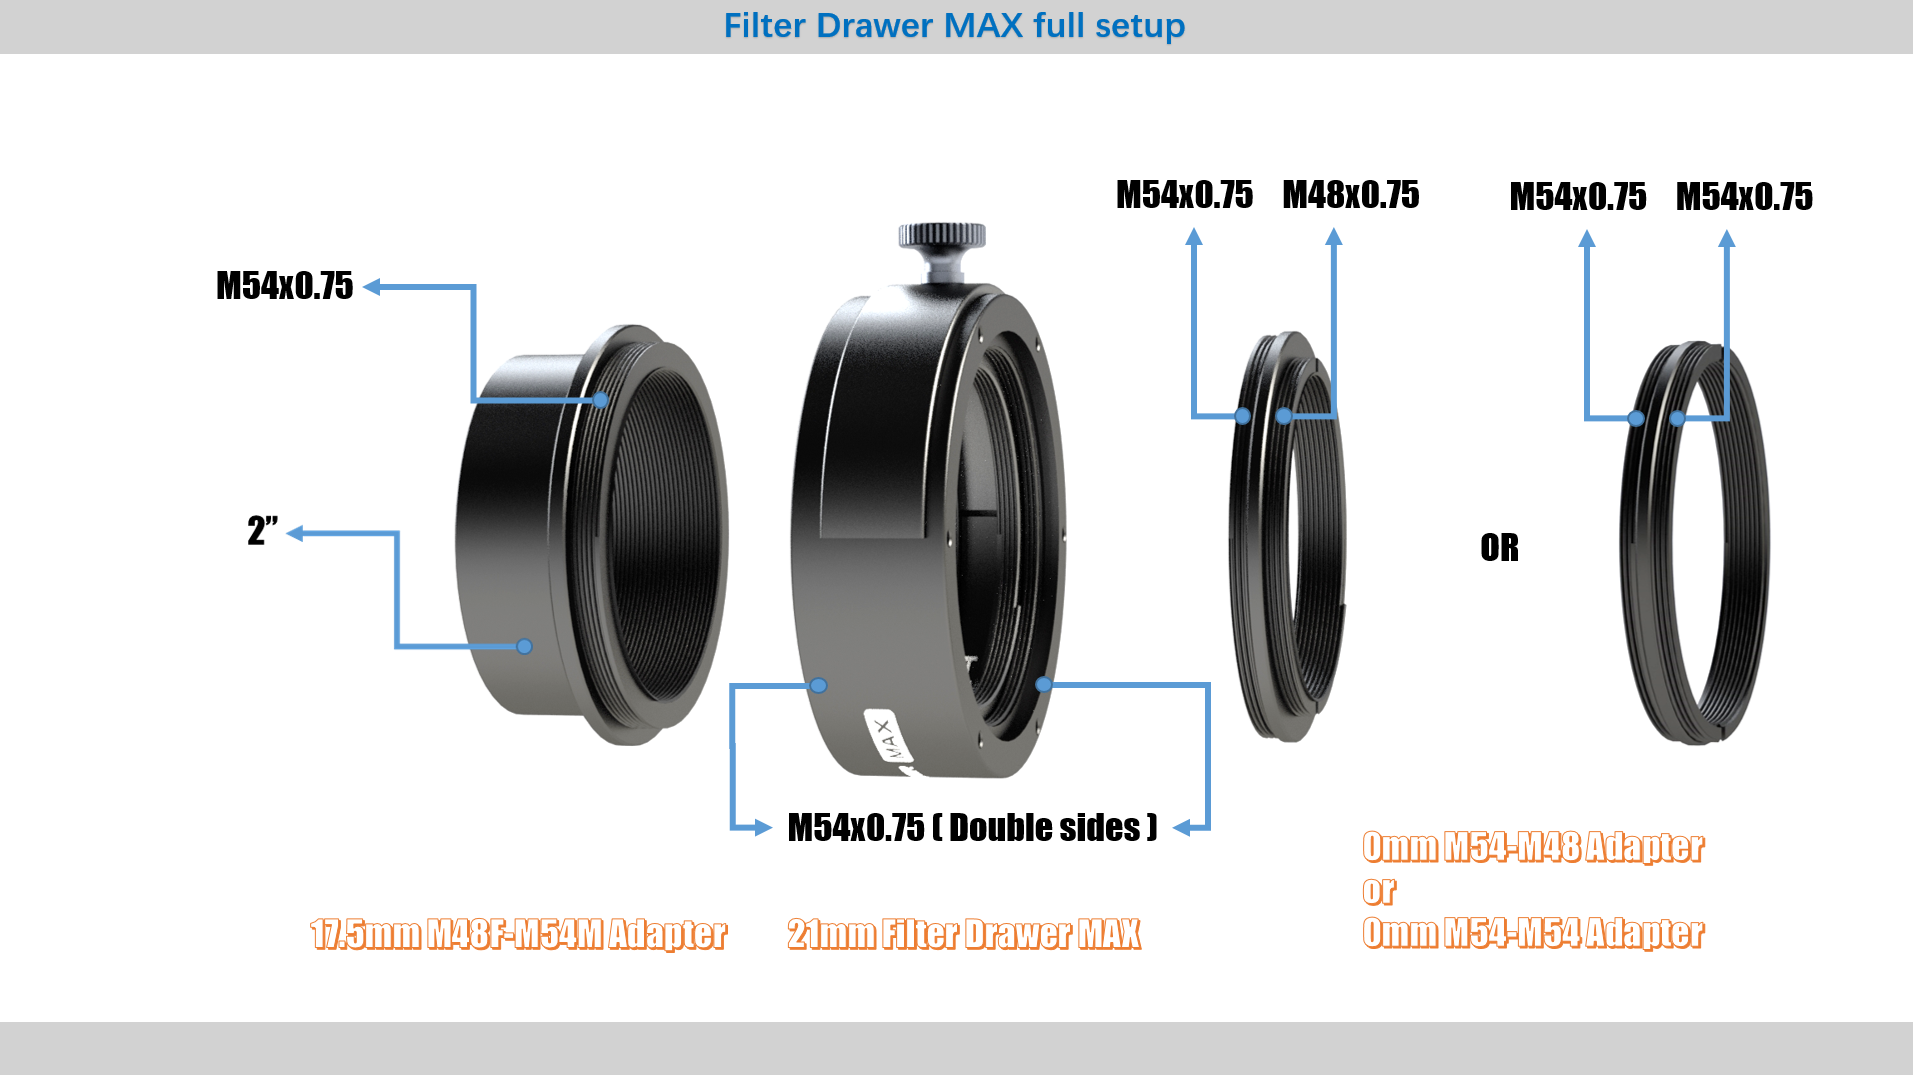 Filter-Drawer-MAX-full-setup1.png (1913×1075)